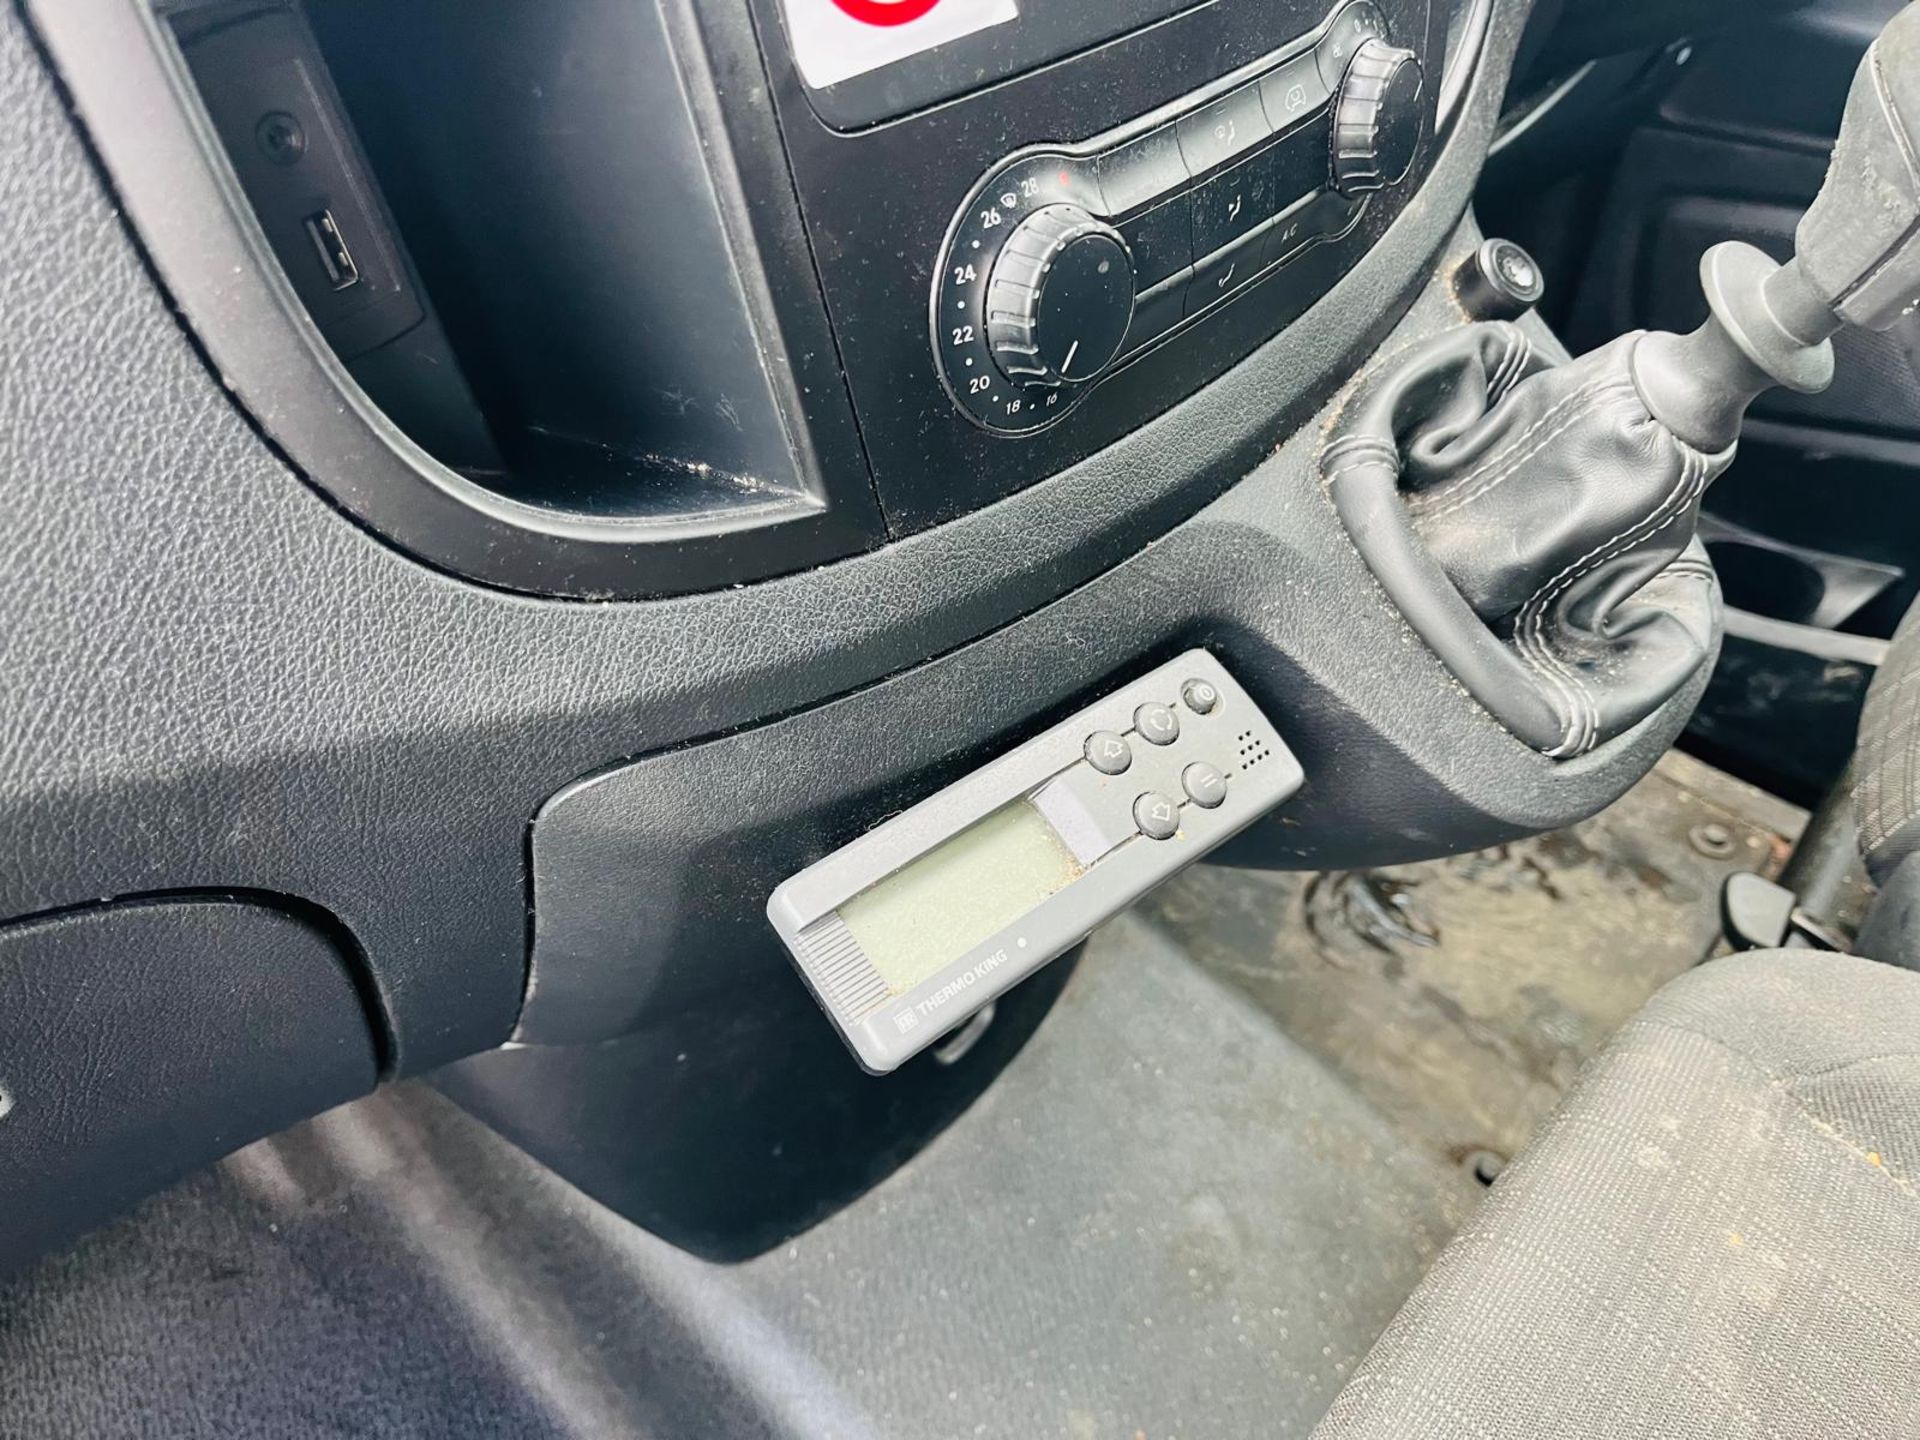 Mercedes Benz Vito 2.1 114 CDI RWD Fridge/Freezer 2019 '19 Reg '-ULEZ Compliant-Parking Sensors-A/C - Image 21 of 27